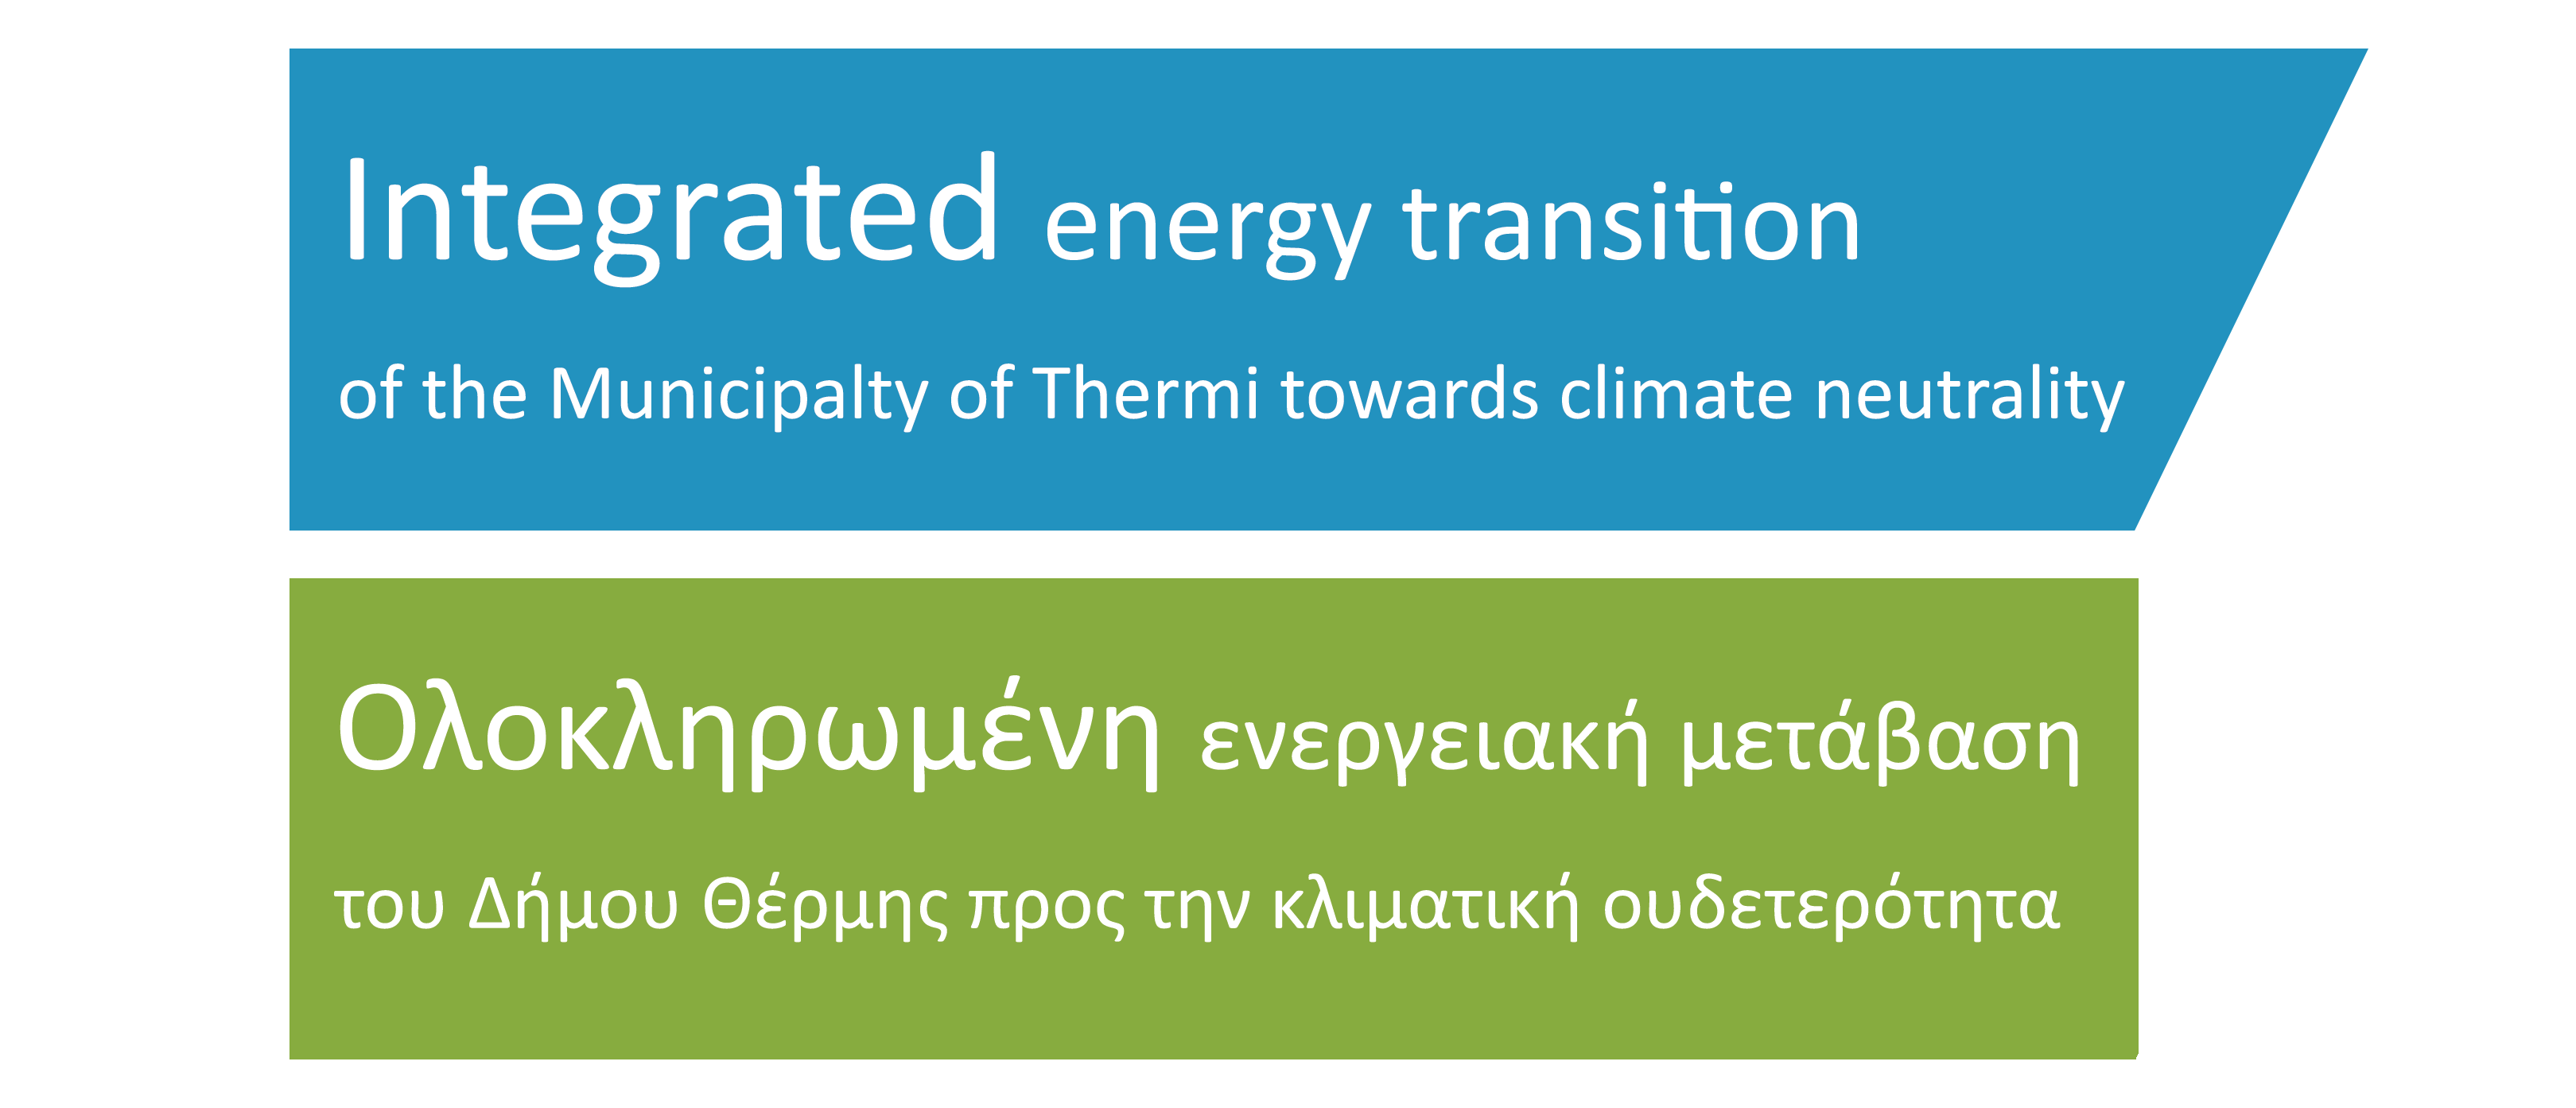 Integrated energy transition of the Municipalty of Thermi towards climate neutrality Ολοκληρωμένη ενεργειακή μετάβαση του Δήμου Θέρμης προς την κλιματική ουδετερότητα